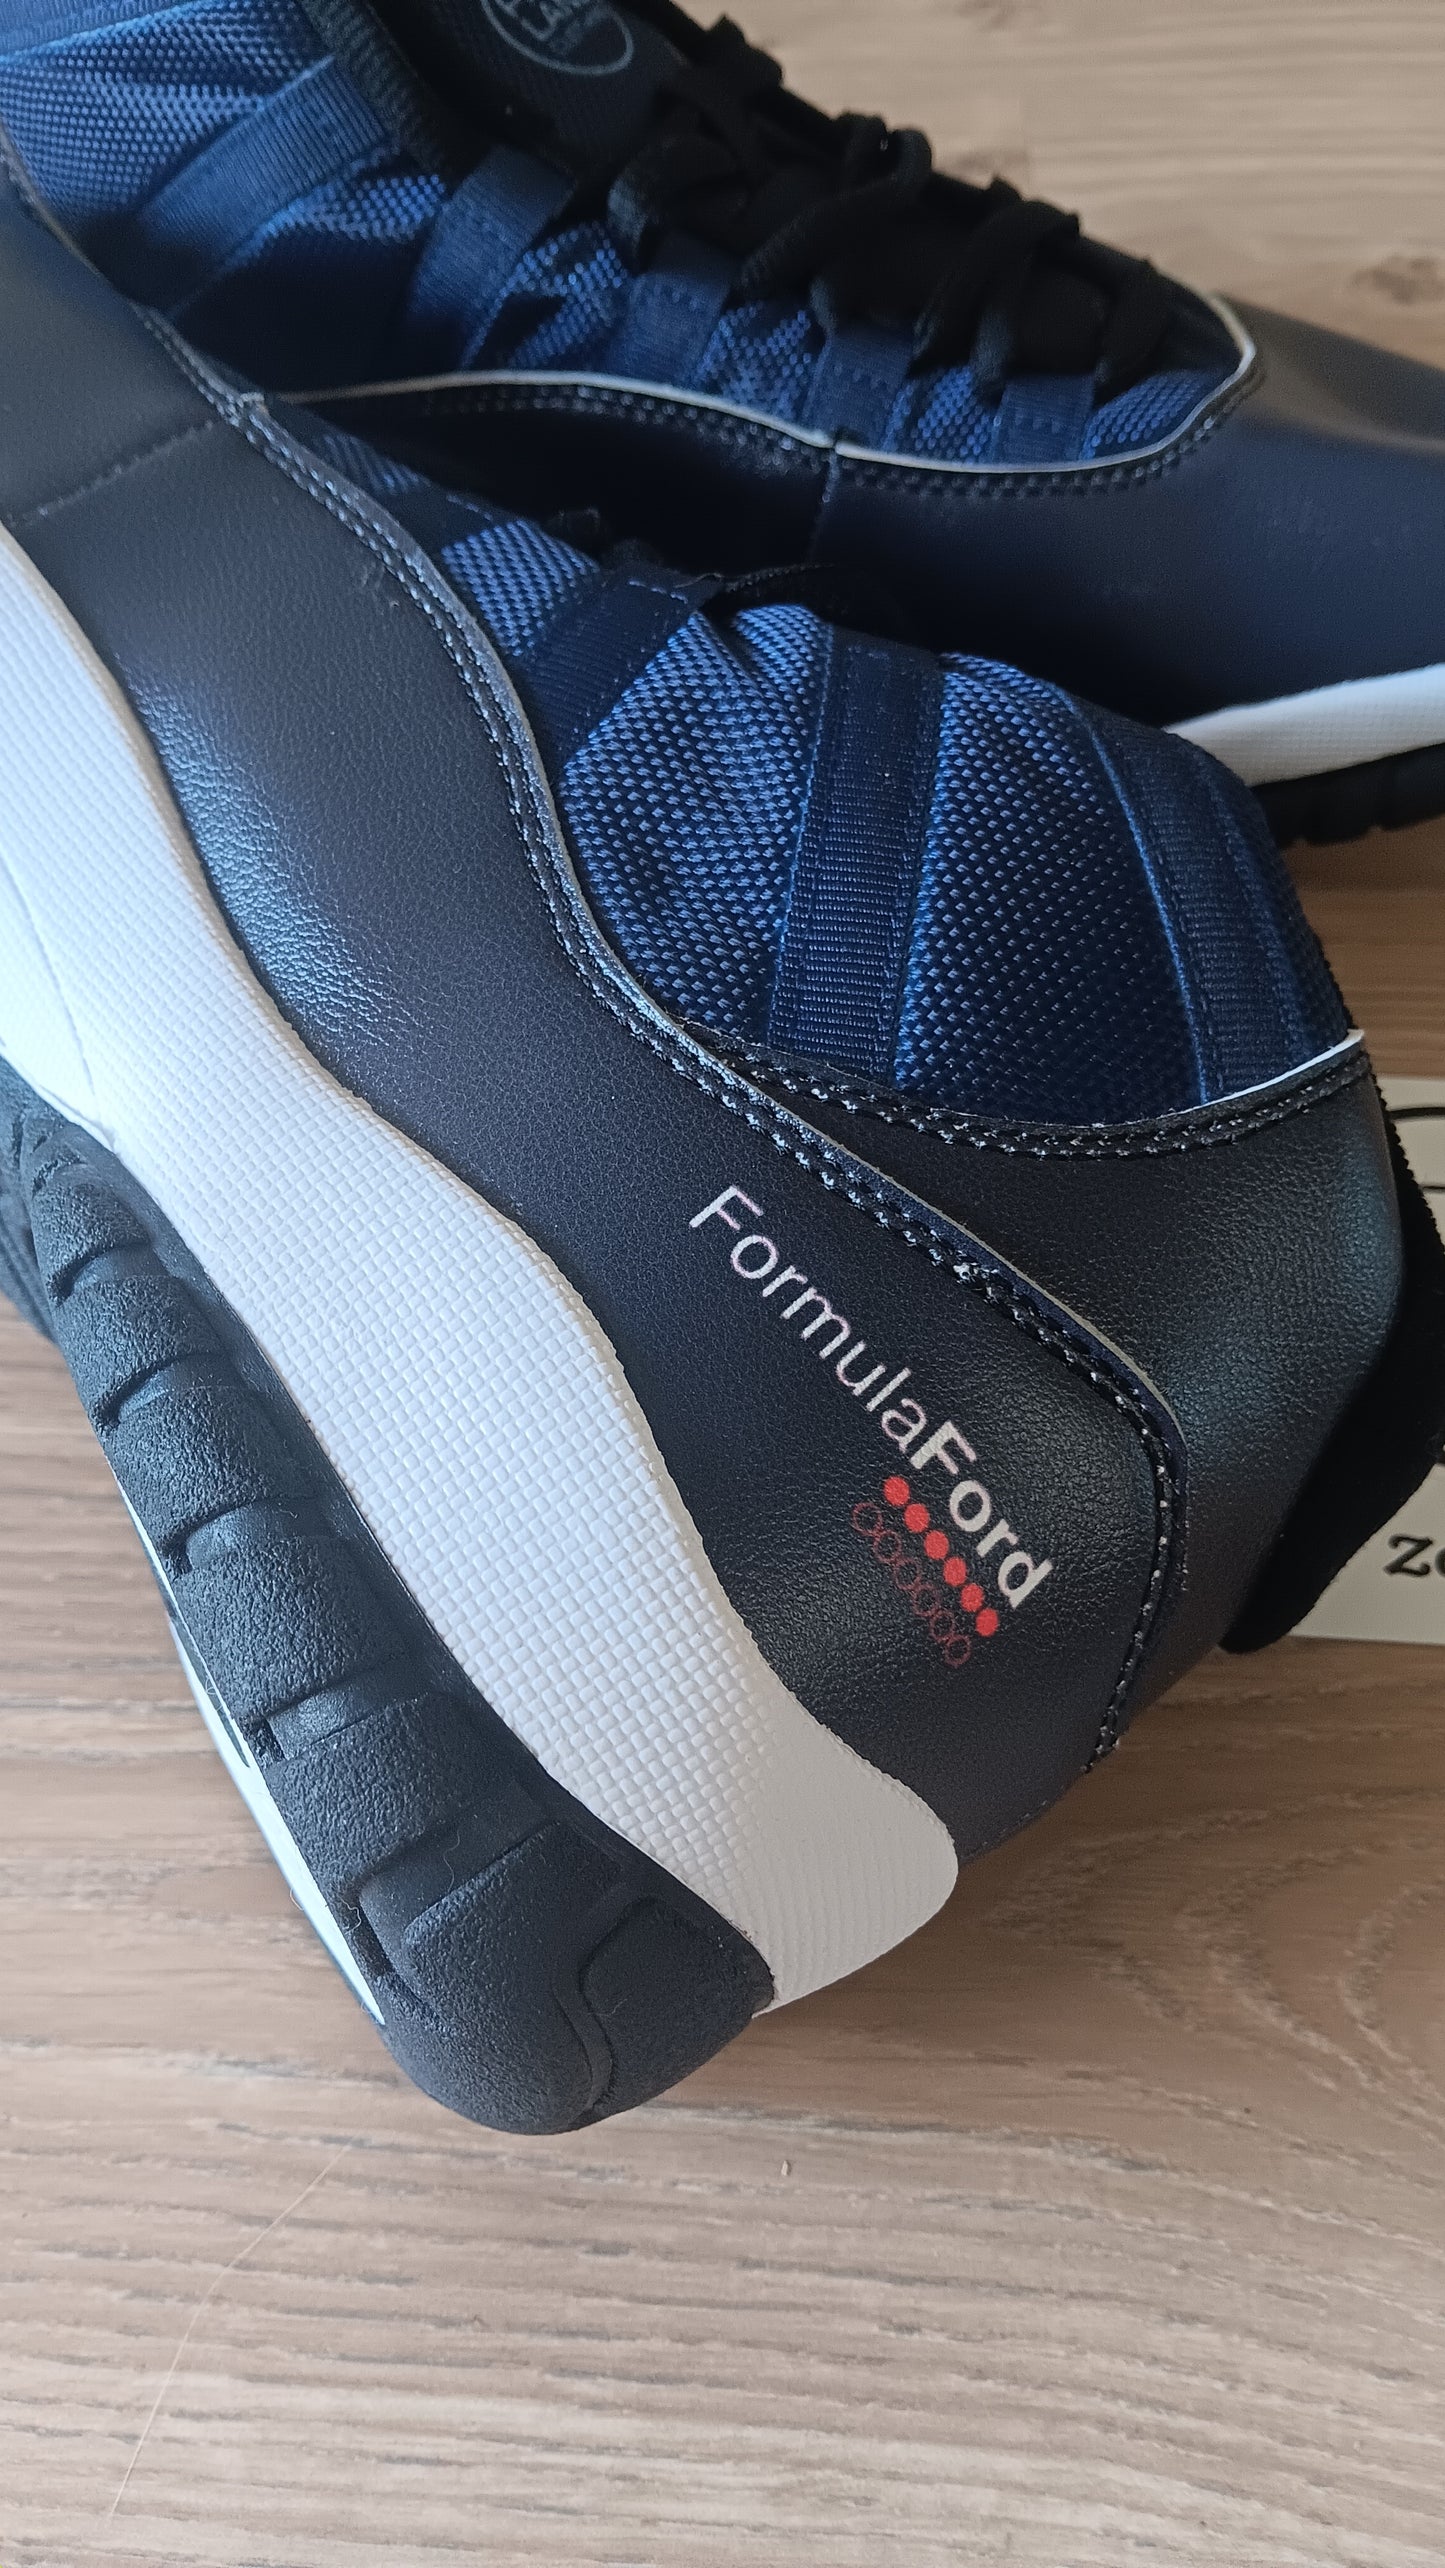 FORMULA FORD Official 'Excelsior' Leather Ultimate Track shoe - Navy